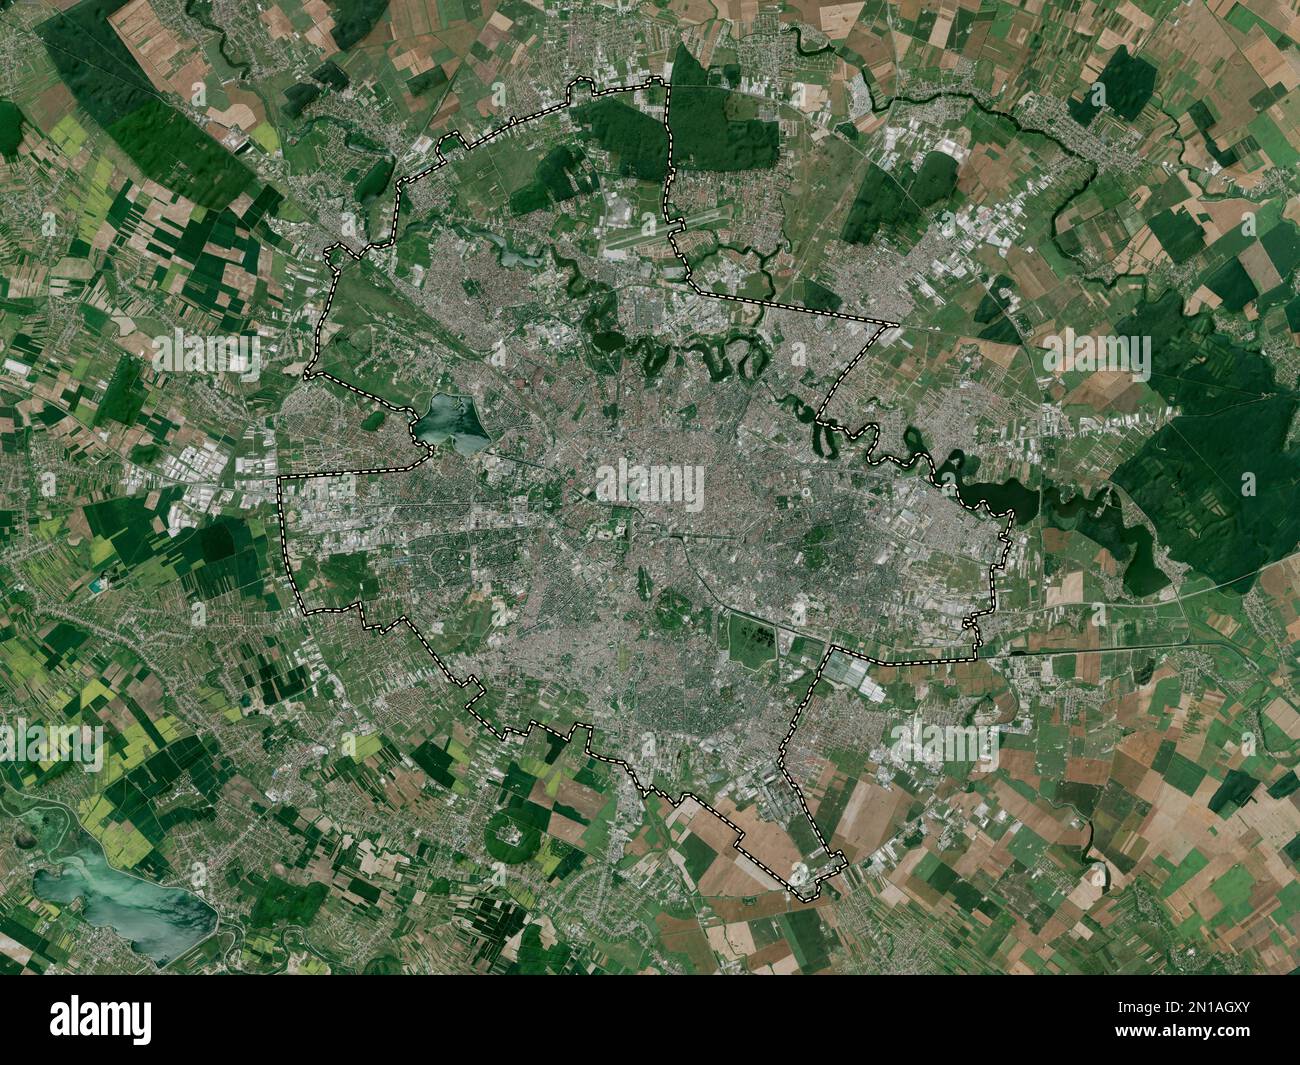 Bucharest Municipality Of Romania High Resolution Satellite Map 2N1AGXY 